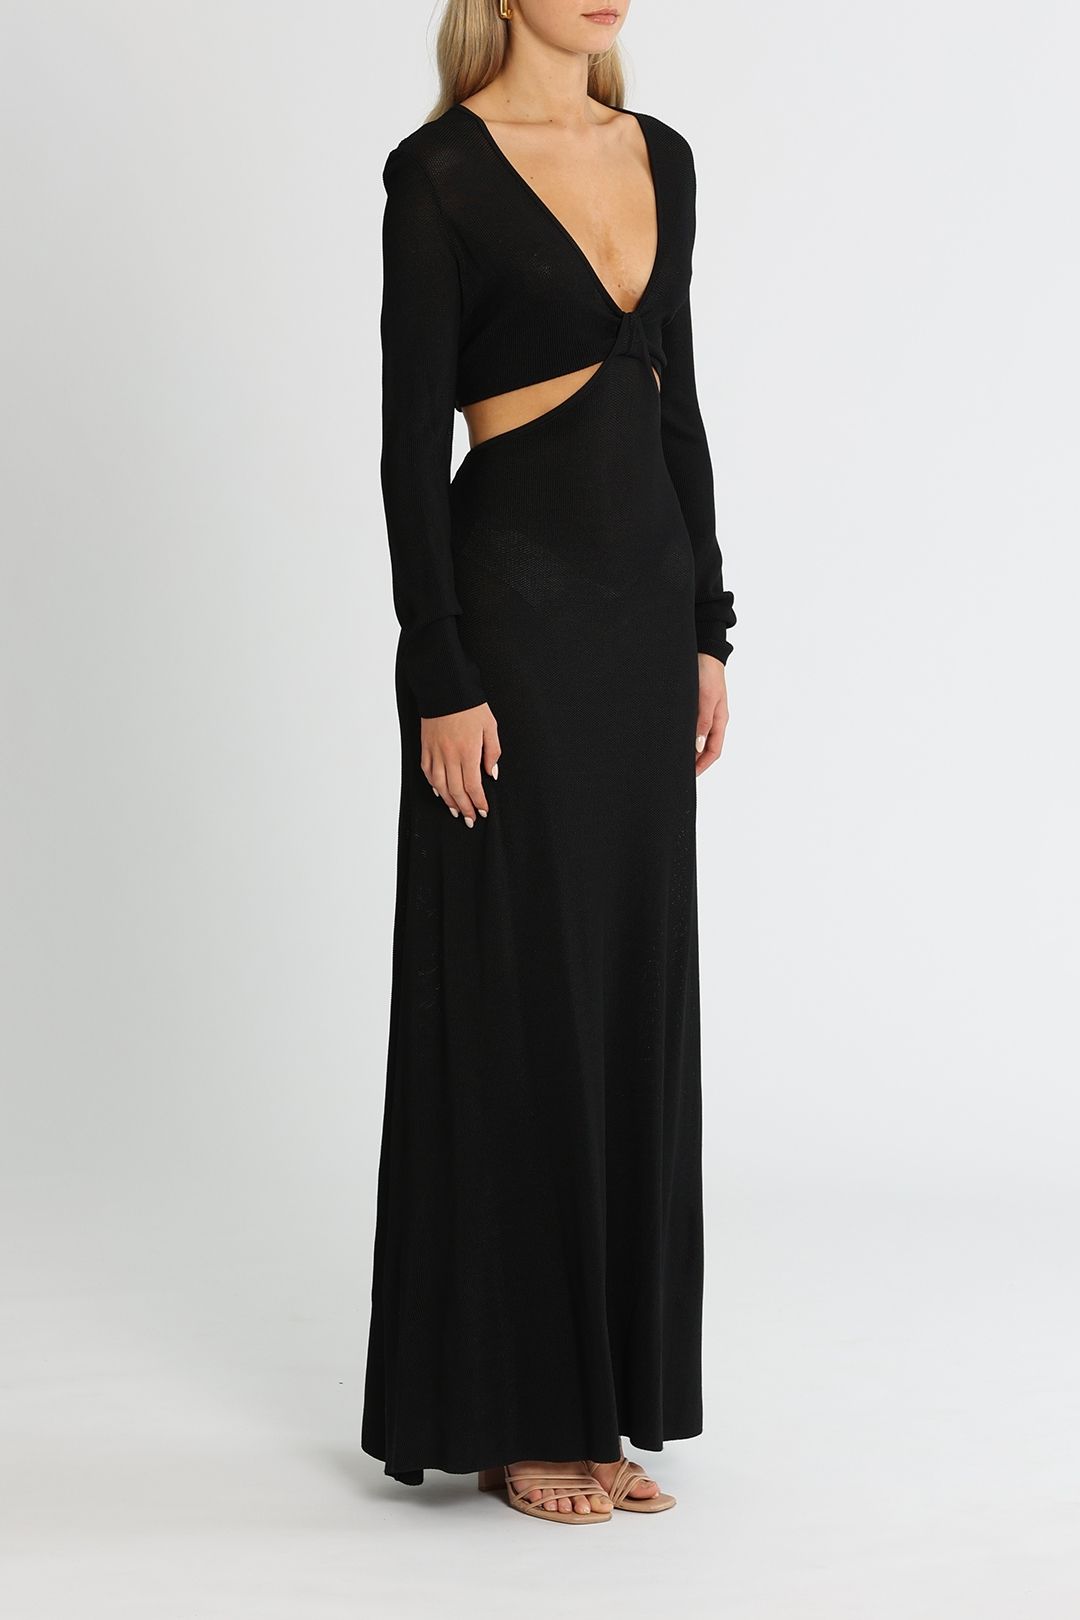 Camilla and Marc Alvar Knit Dress Black Cutout